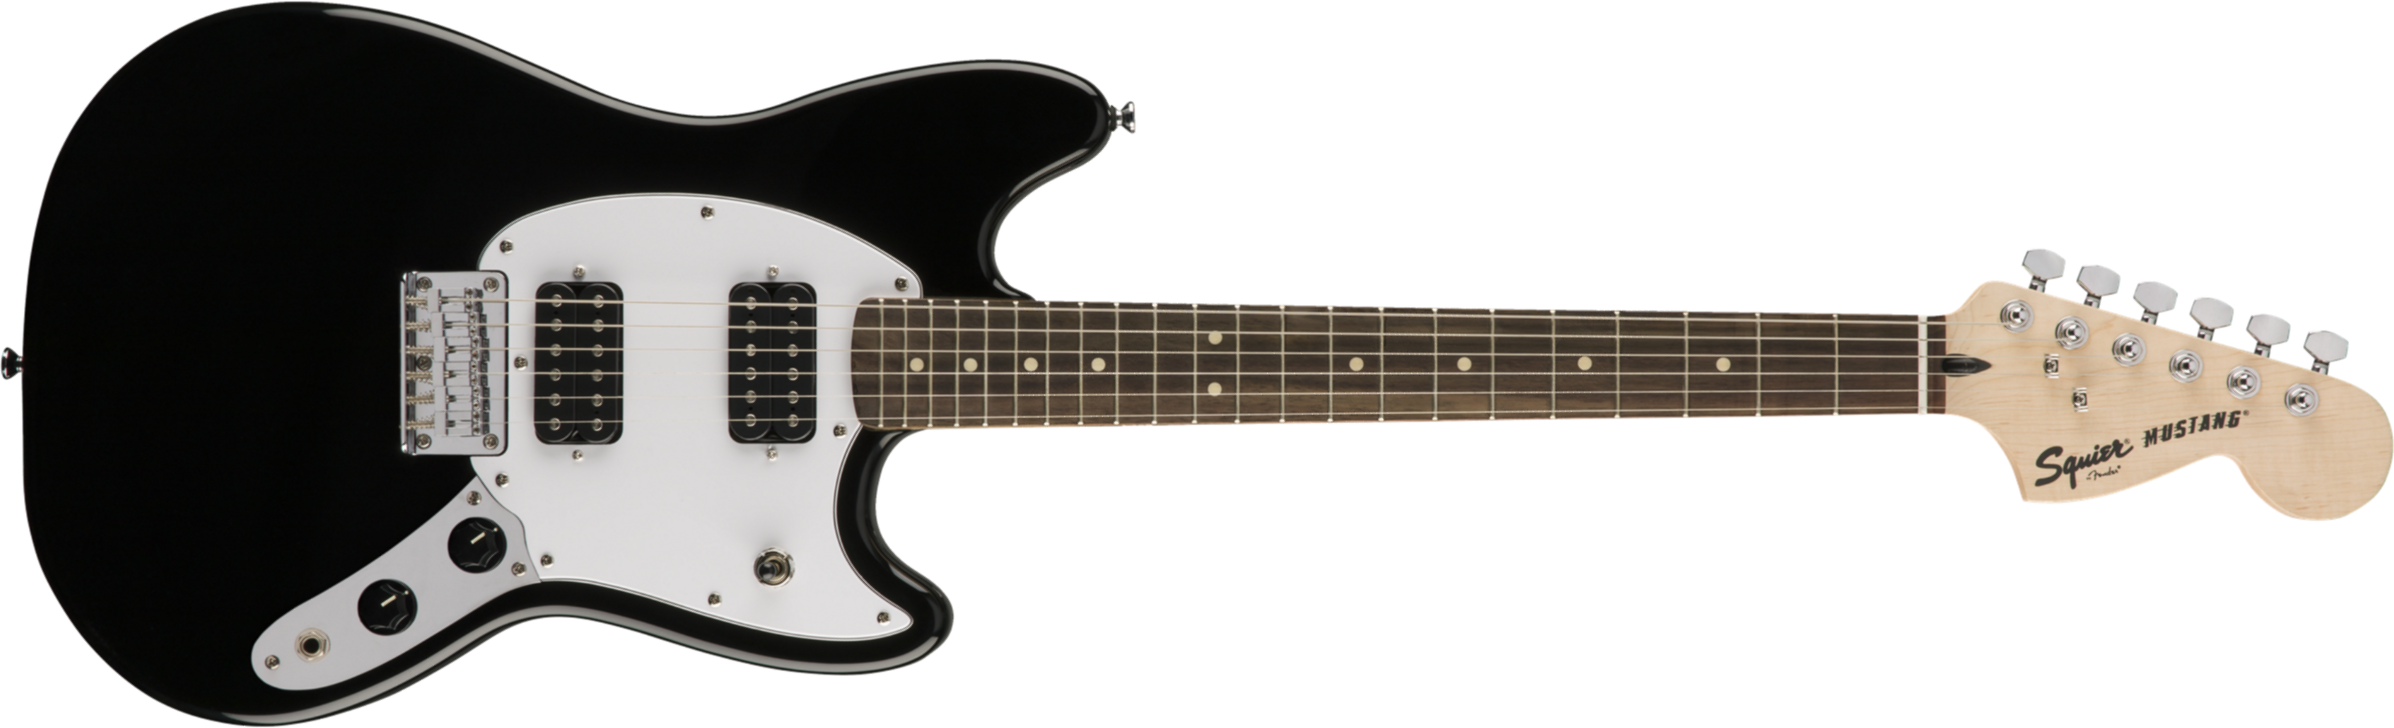 Squier Mustang Bullet Hh 2019 Ht Lau - Black - Guitarra electrica retro rock - Main picture